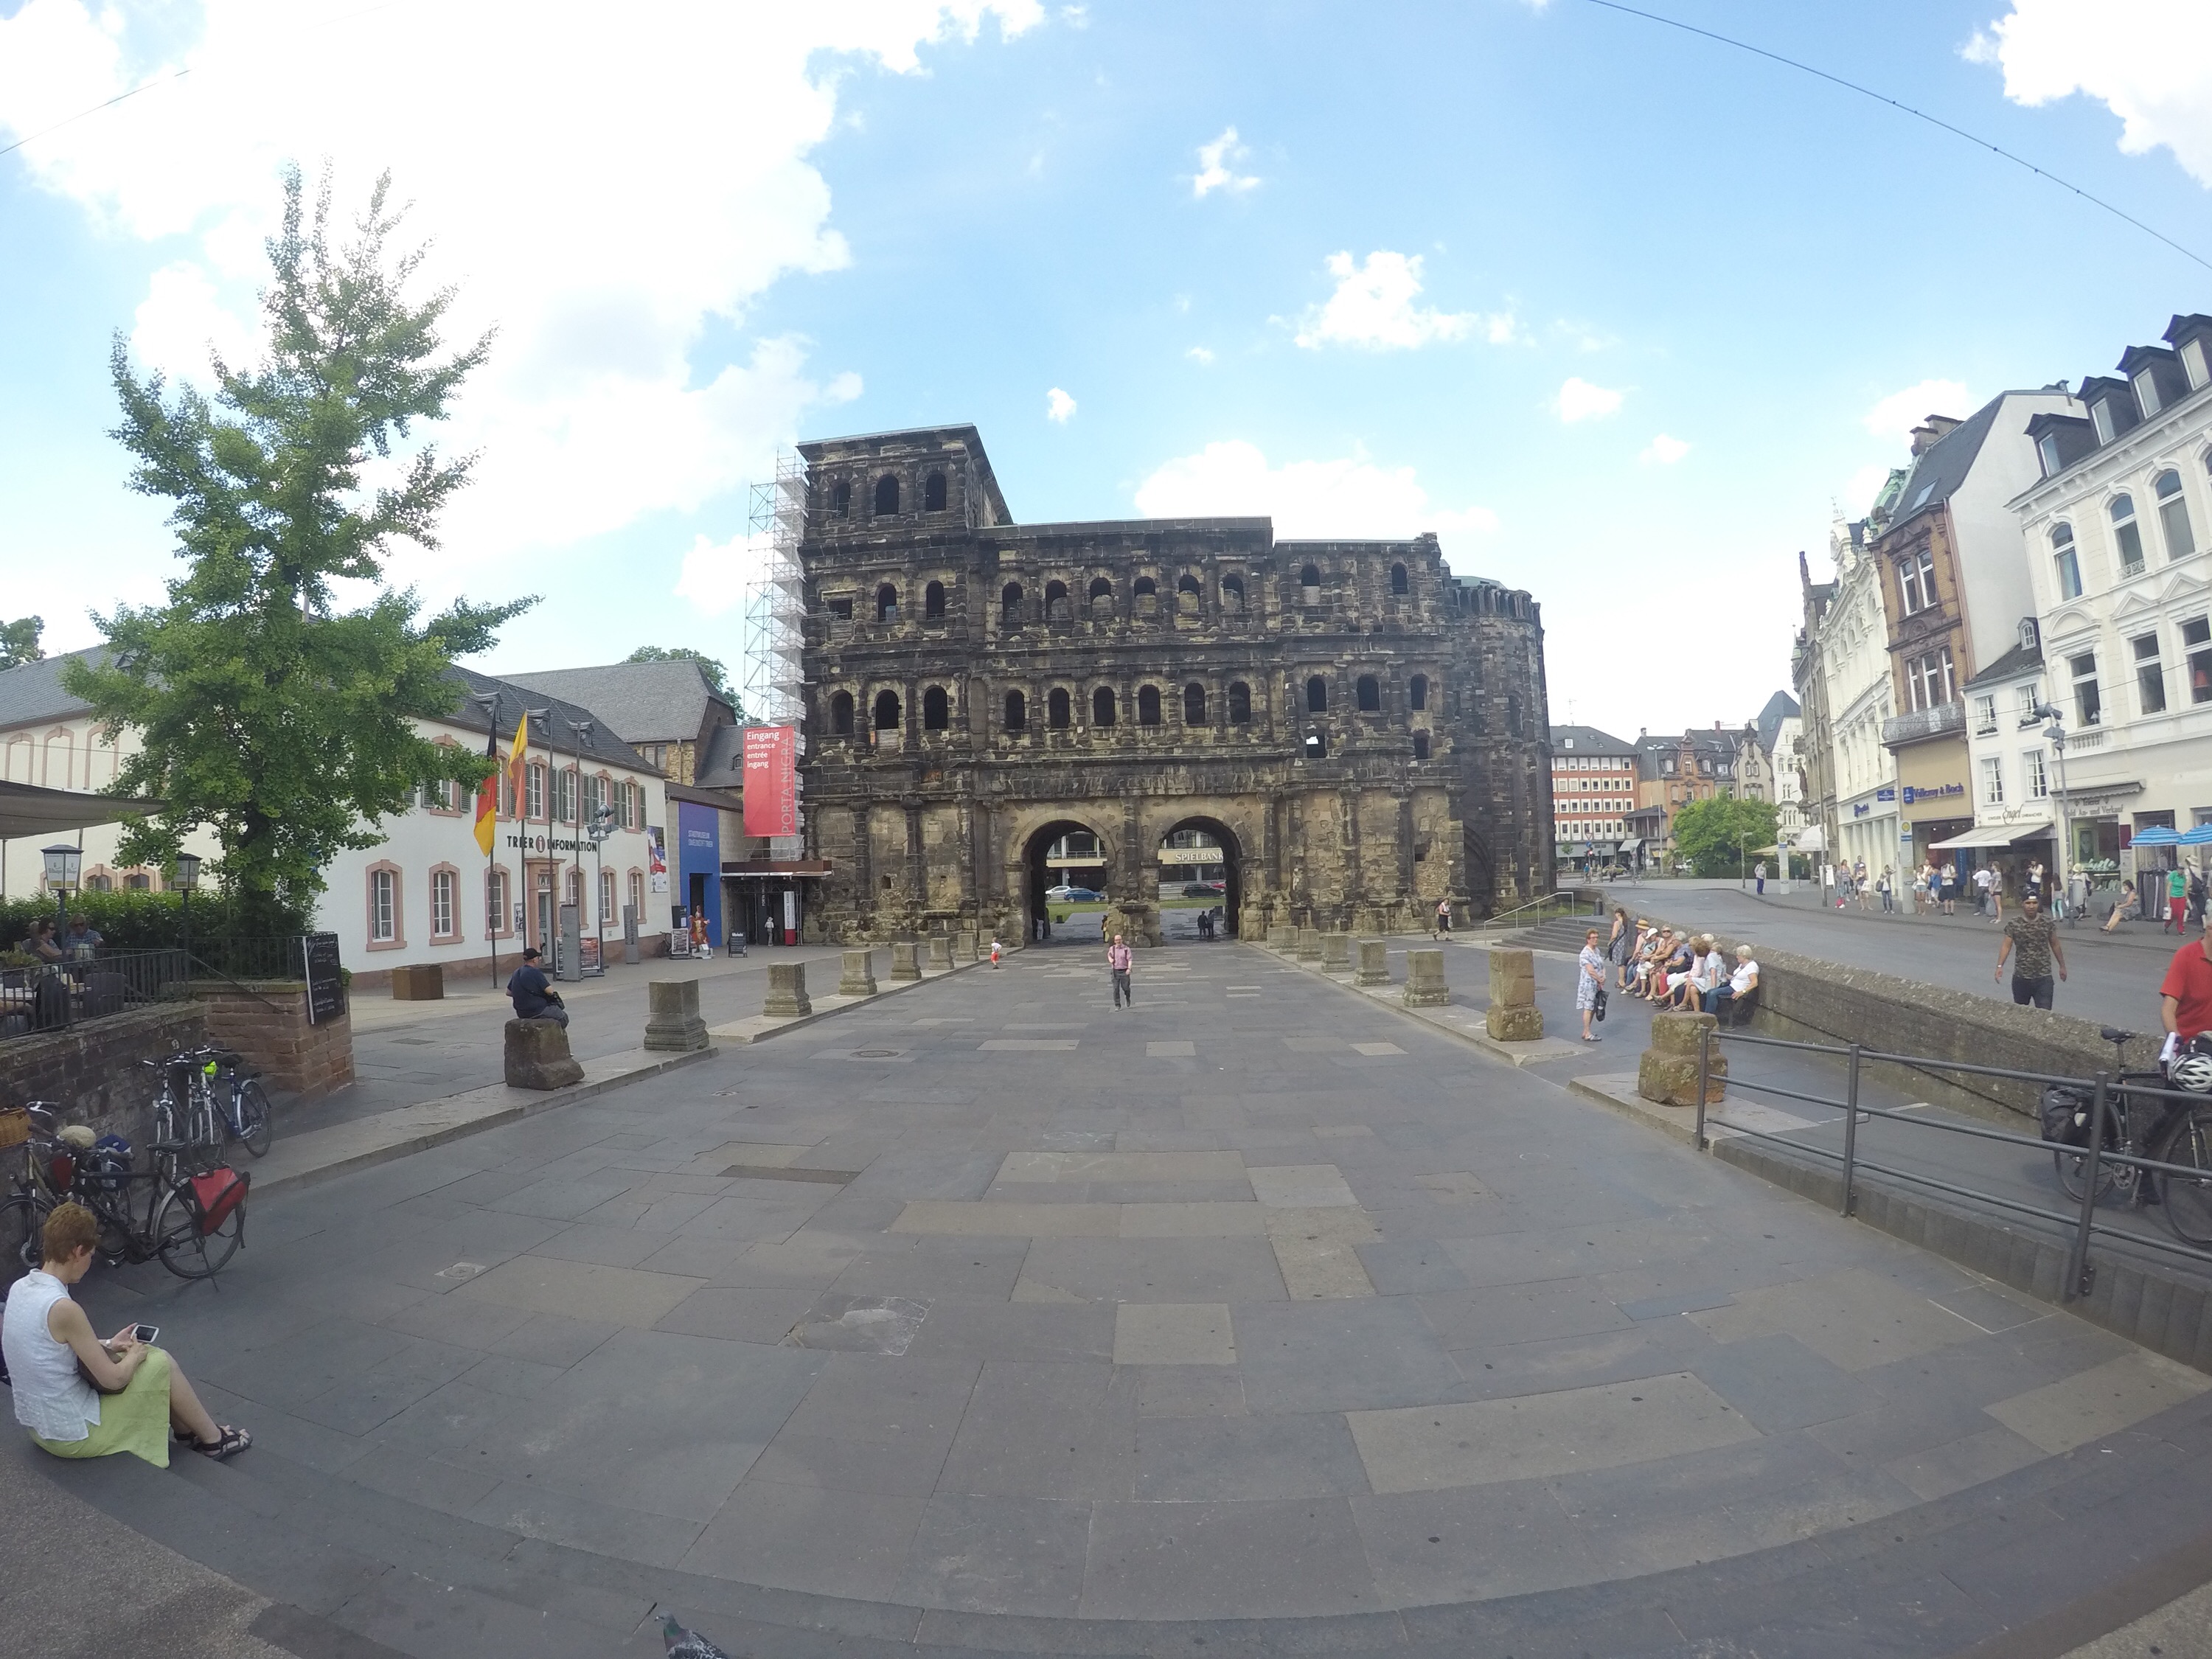 City gate of Trier since roman times!